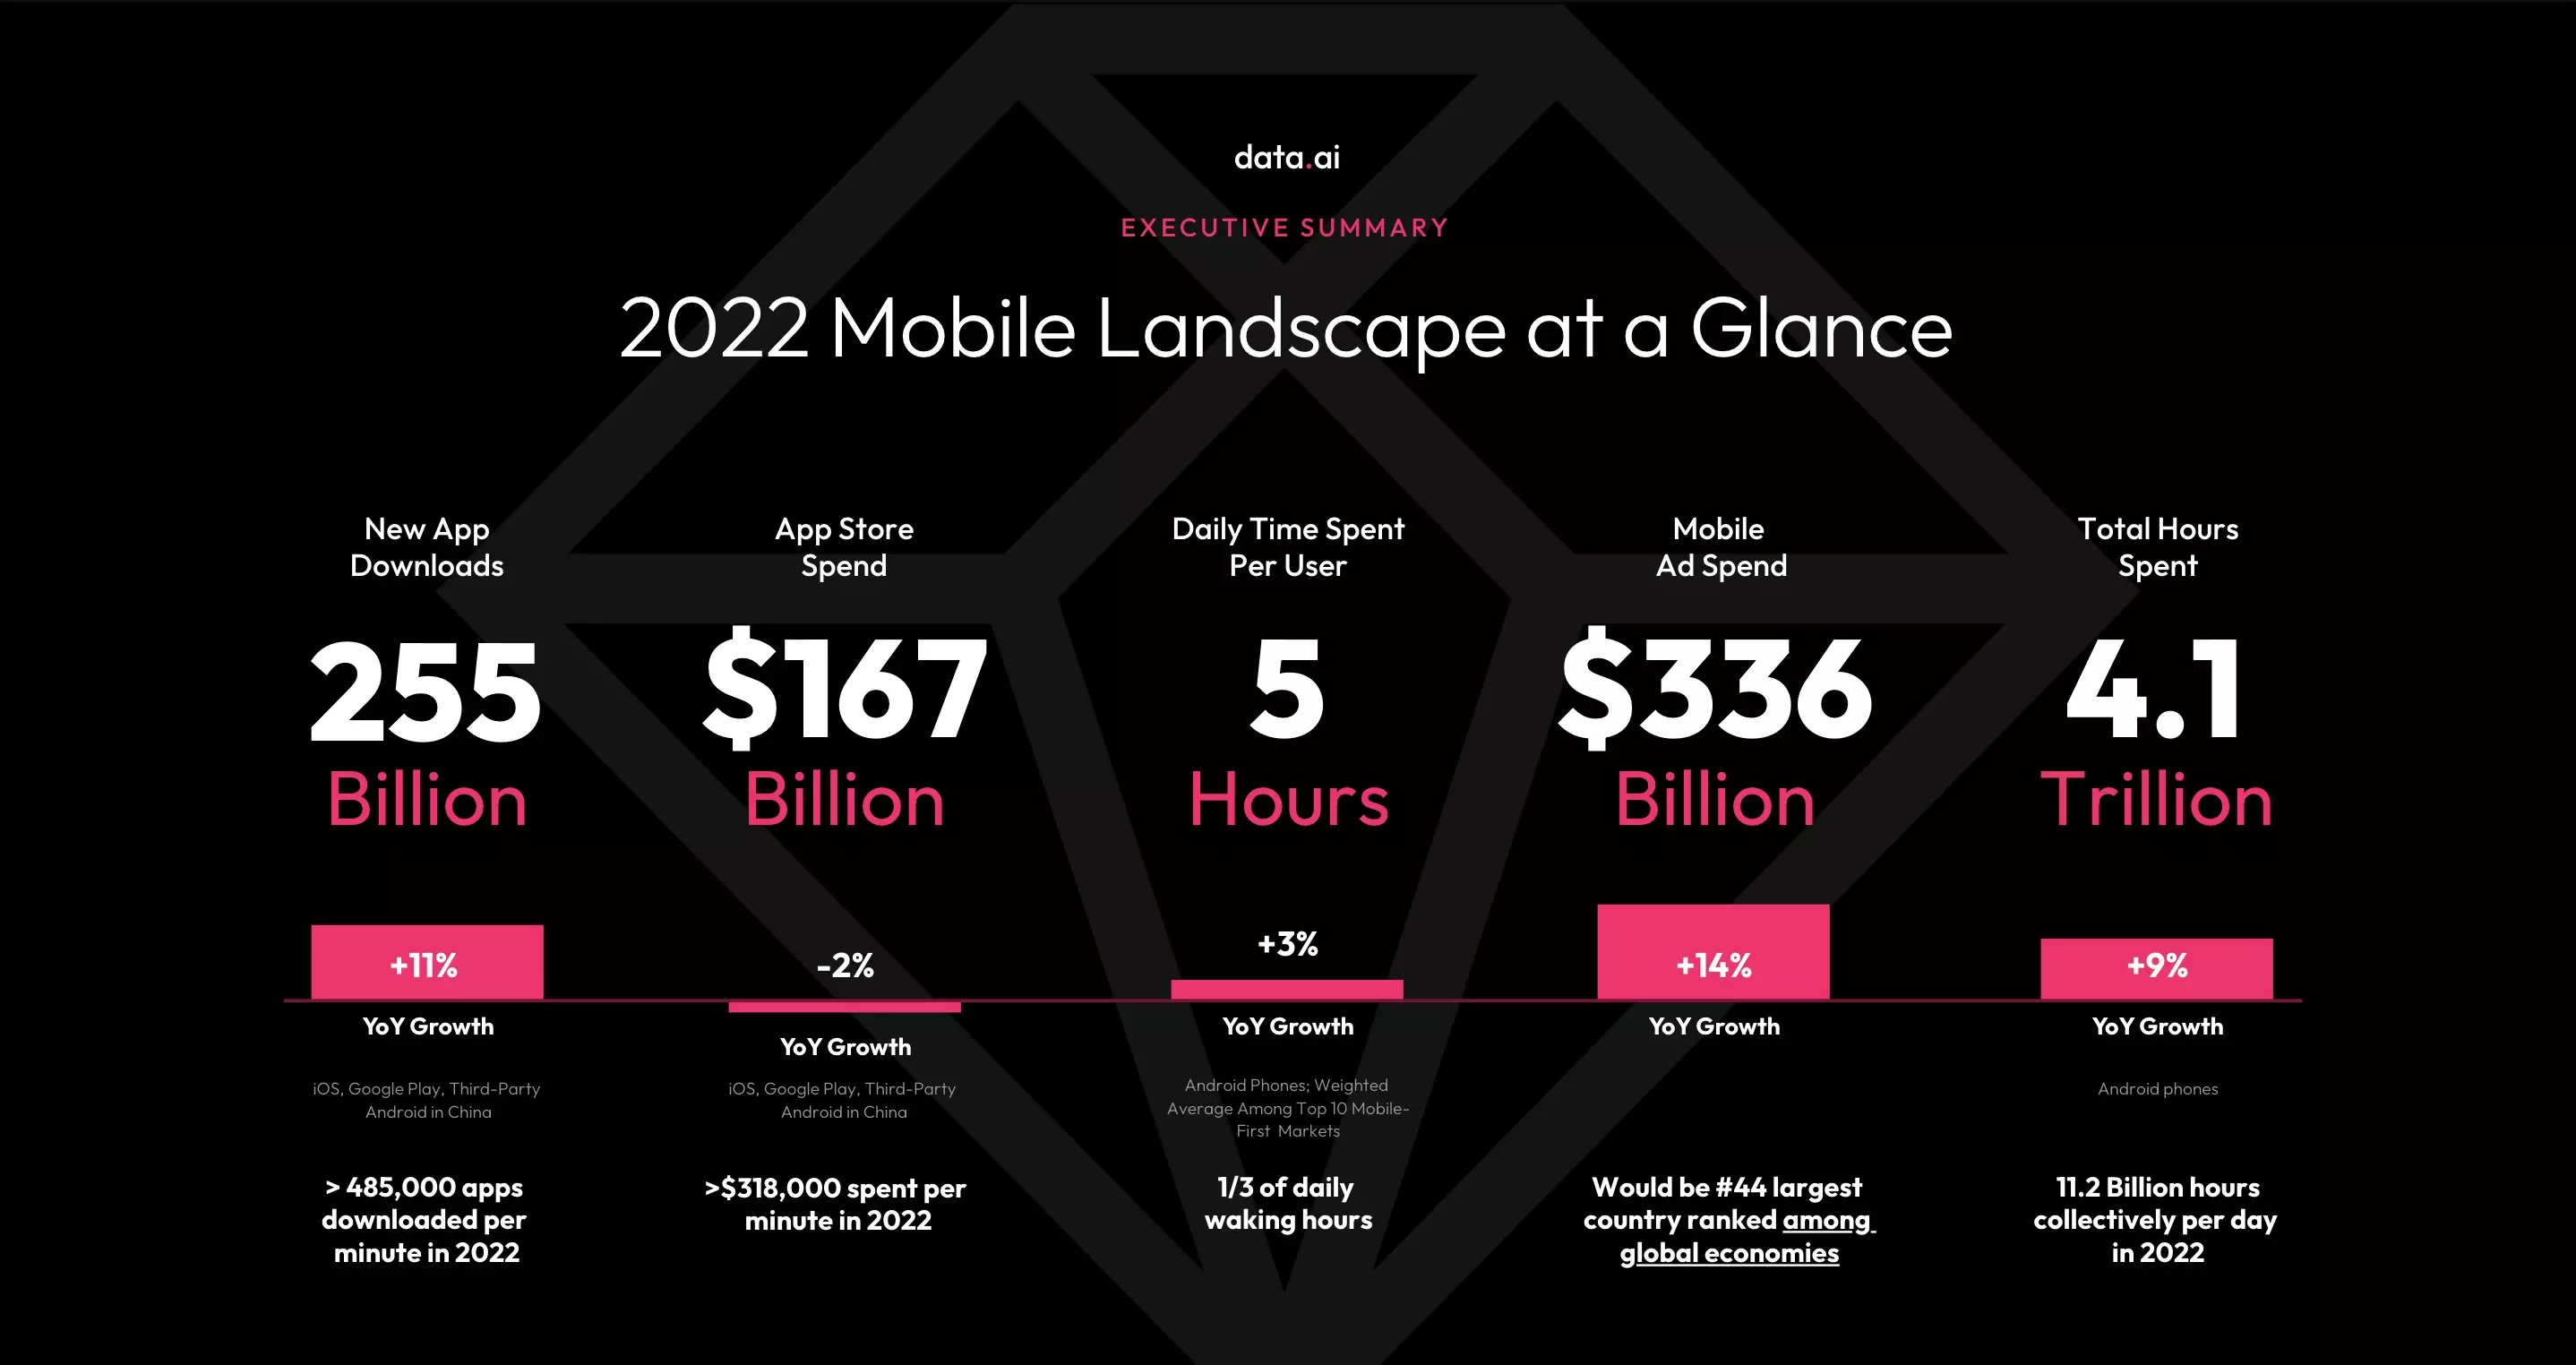 255 Billion downloads, $167 billion App Store Spend, 5 hours spent per user on apps, $336 billion in mobile ad send, 4.1 trillion hours spent in apps.